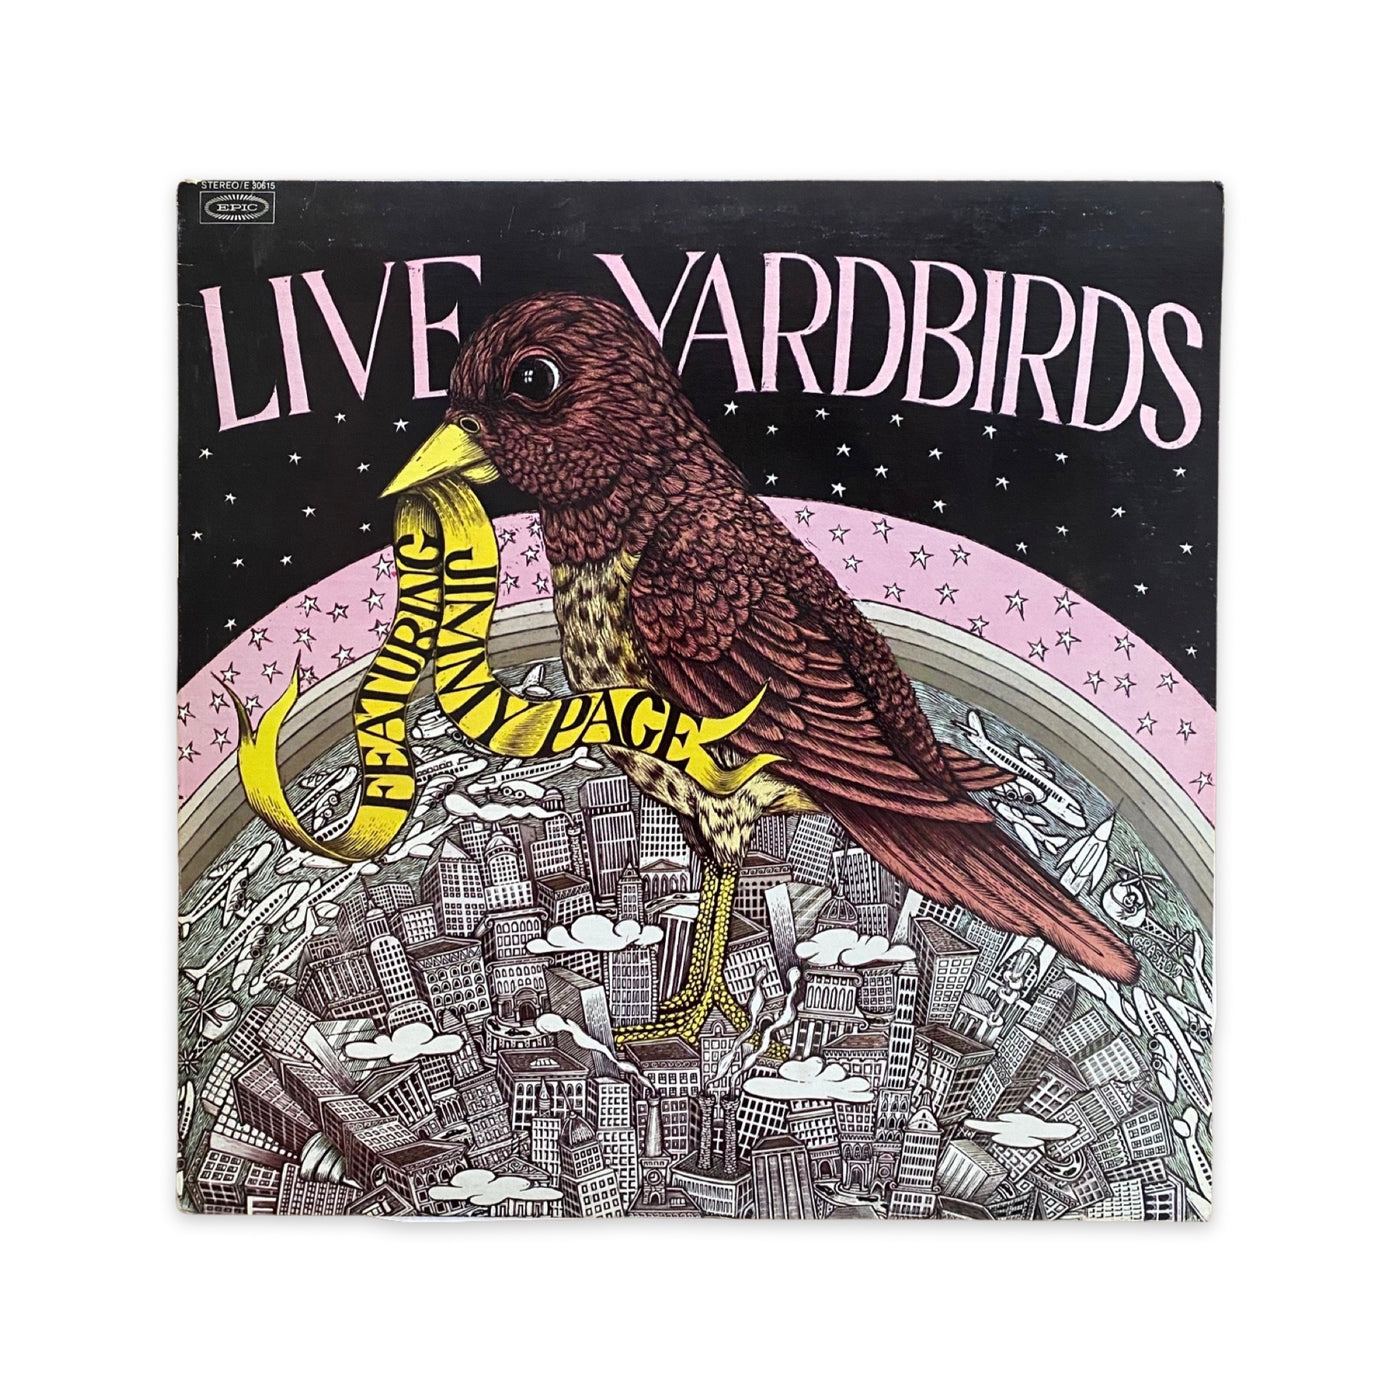 The Yardbirds - Live Yardbirds (Featuring Jimmy Page)